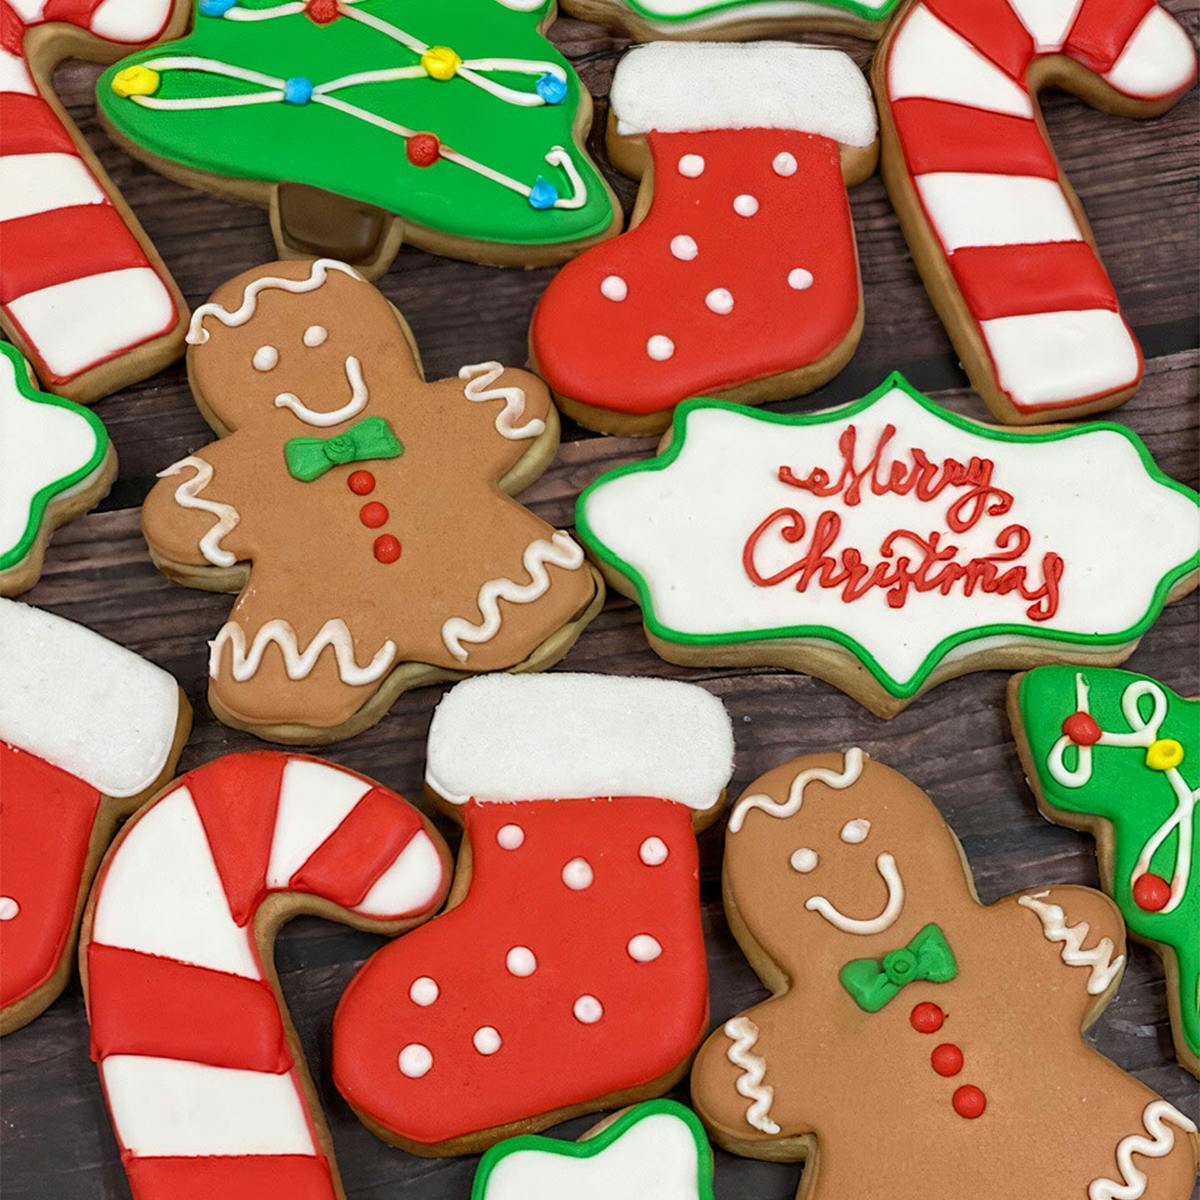 https://goldbelly.imgix.net/uploads/showcase_media_asset/image/178612/Elegant-Desserts-Christmas-Cookies.jpg?ixlib=react-9.0.2&auto=format&ar=1%3A1